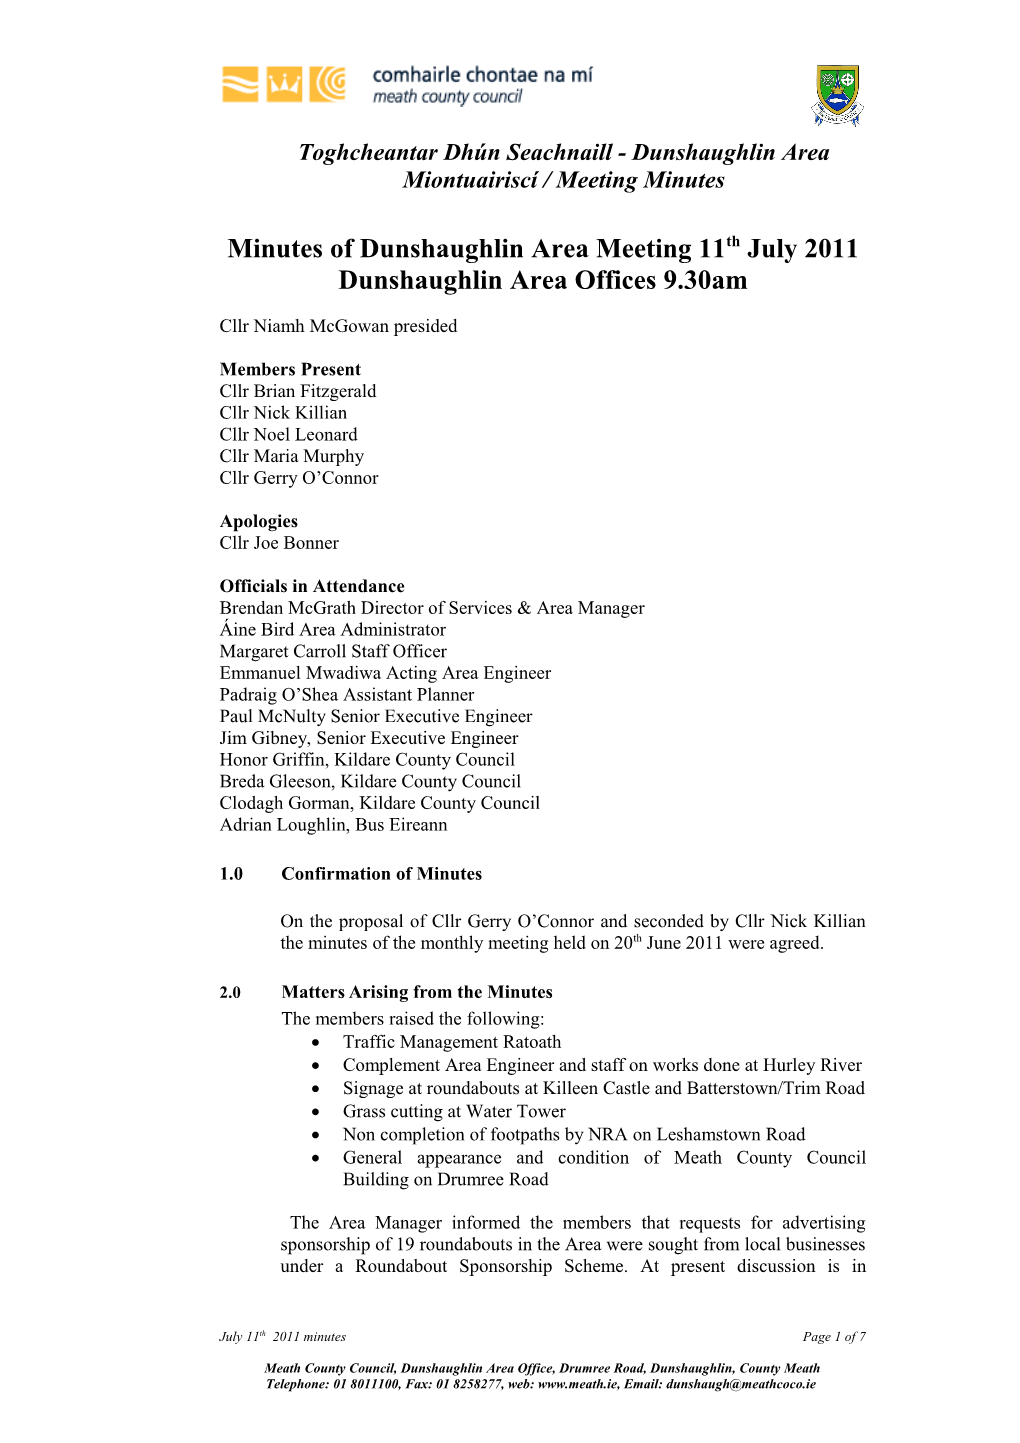 Minutes of Dunshaughlin Area Meeting 11Th July 2011